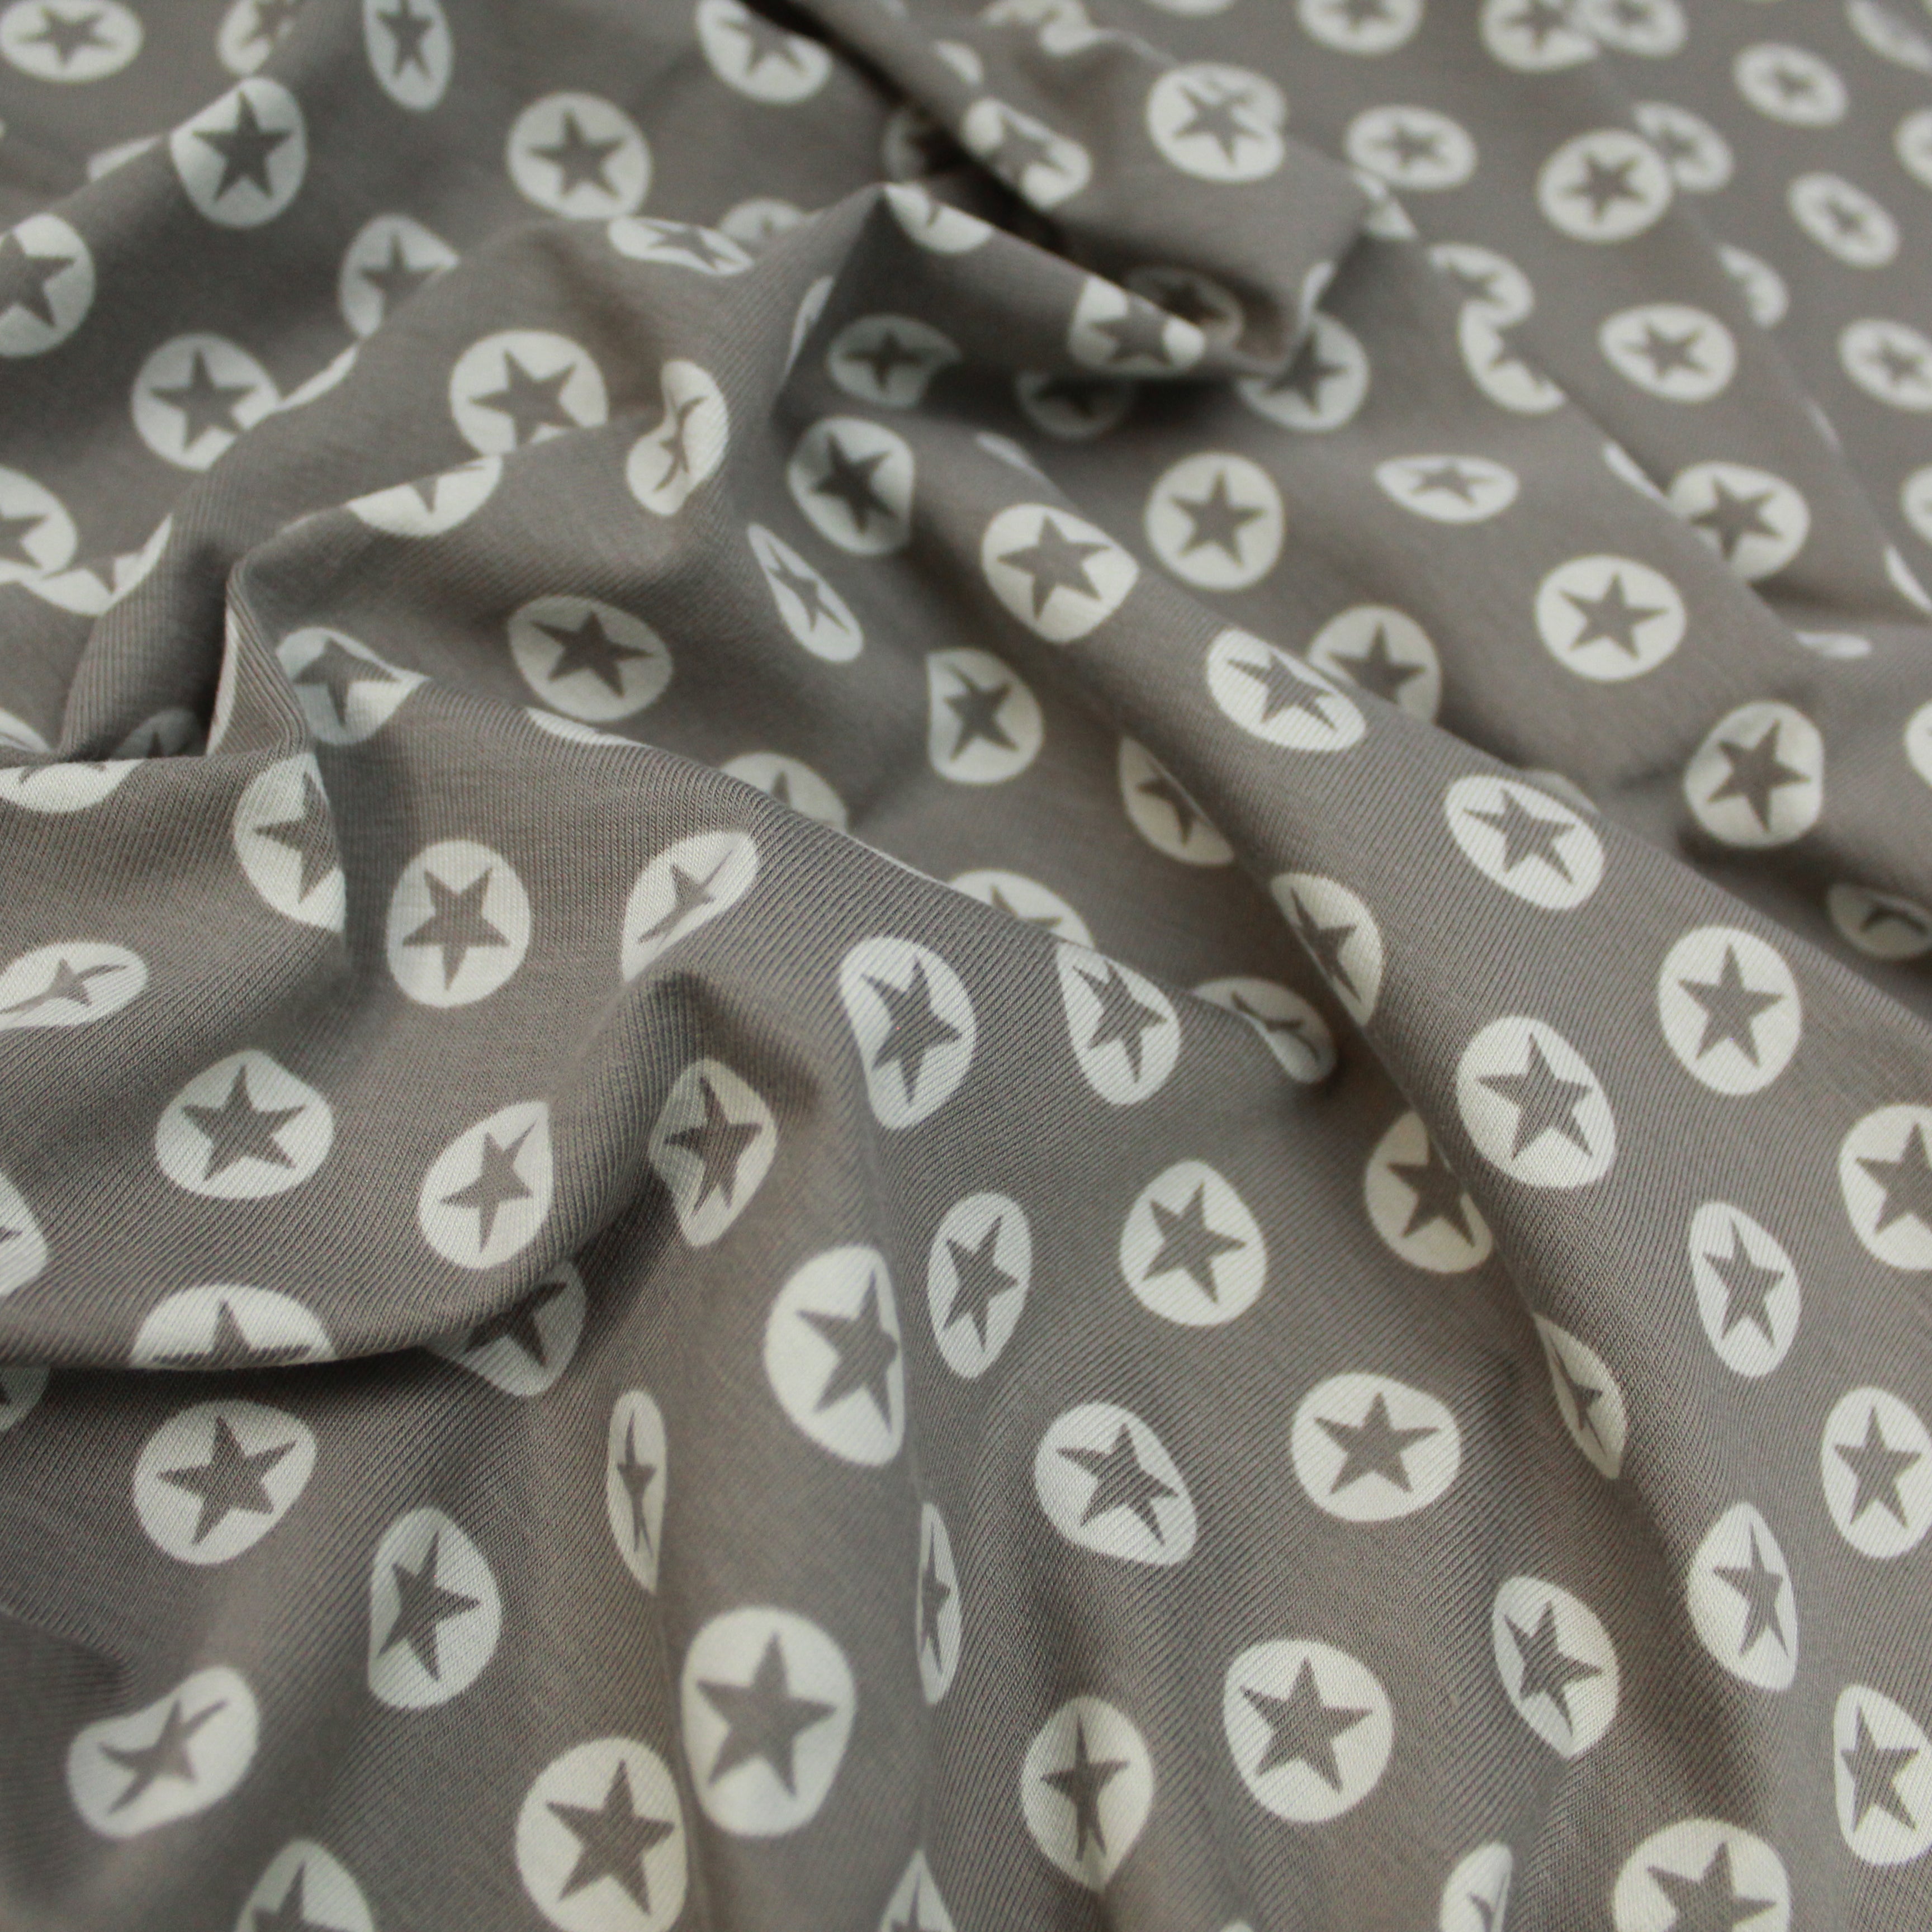 Premium Quality Cotton Jersey "Stars" 44" wide Brown